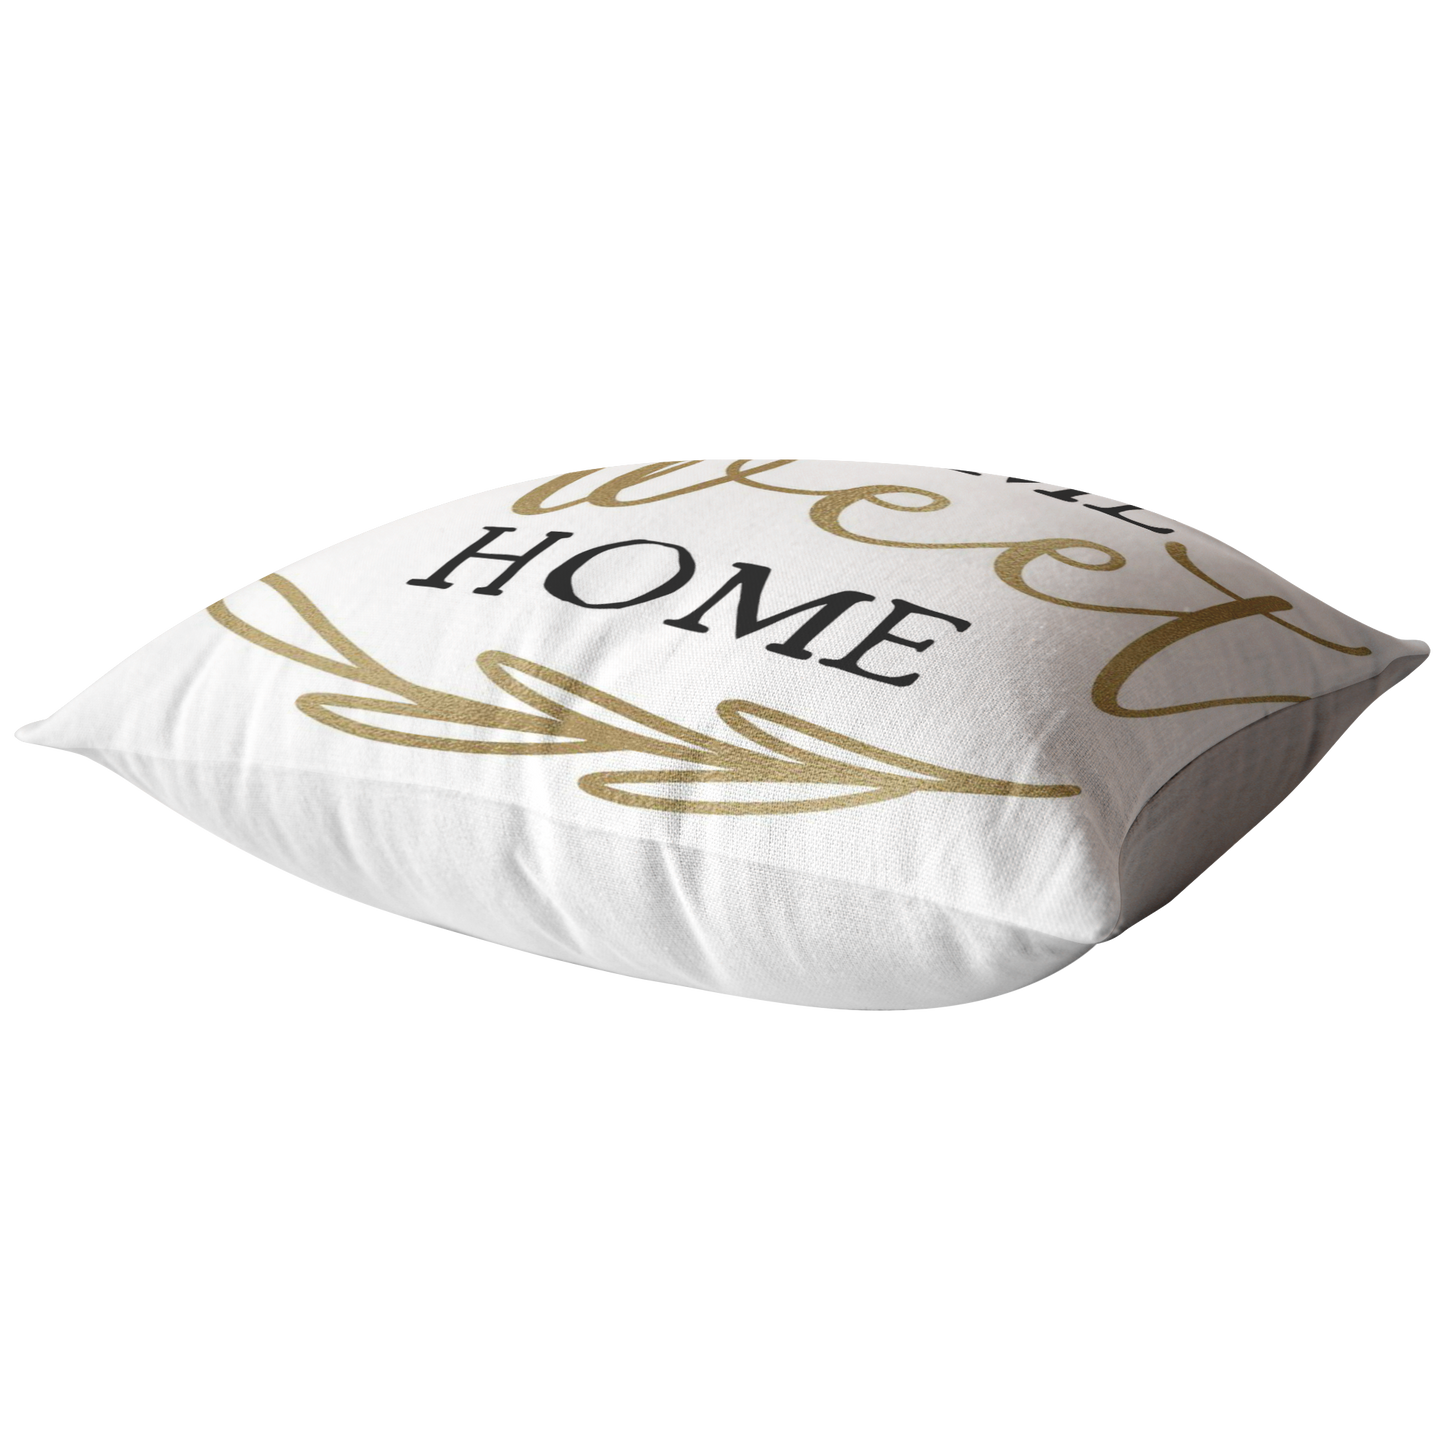 Home sweet Home throw pillow